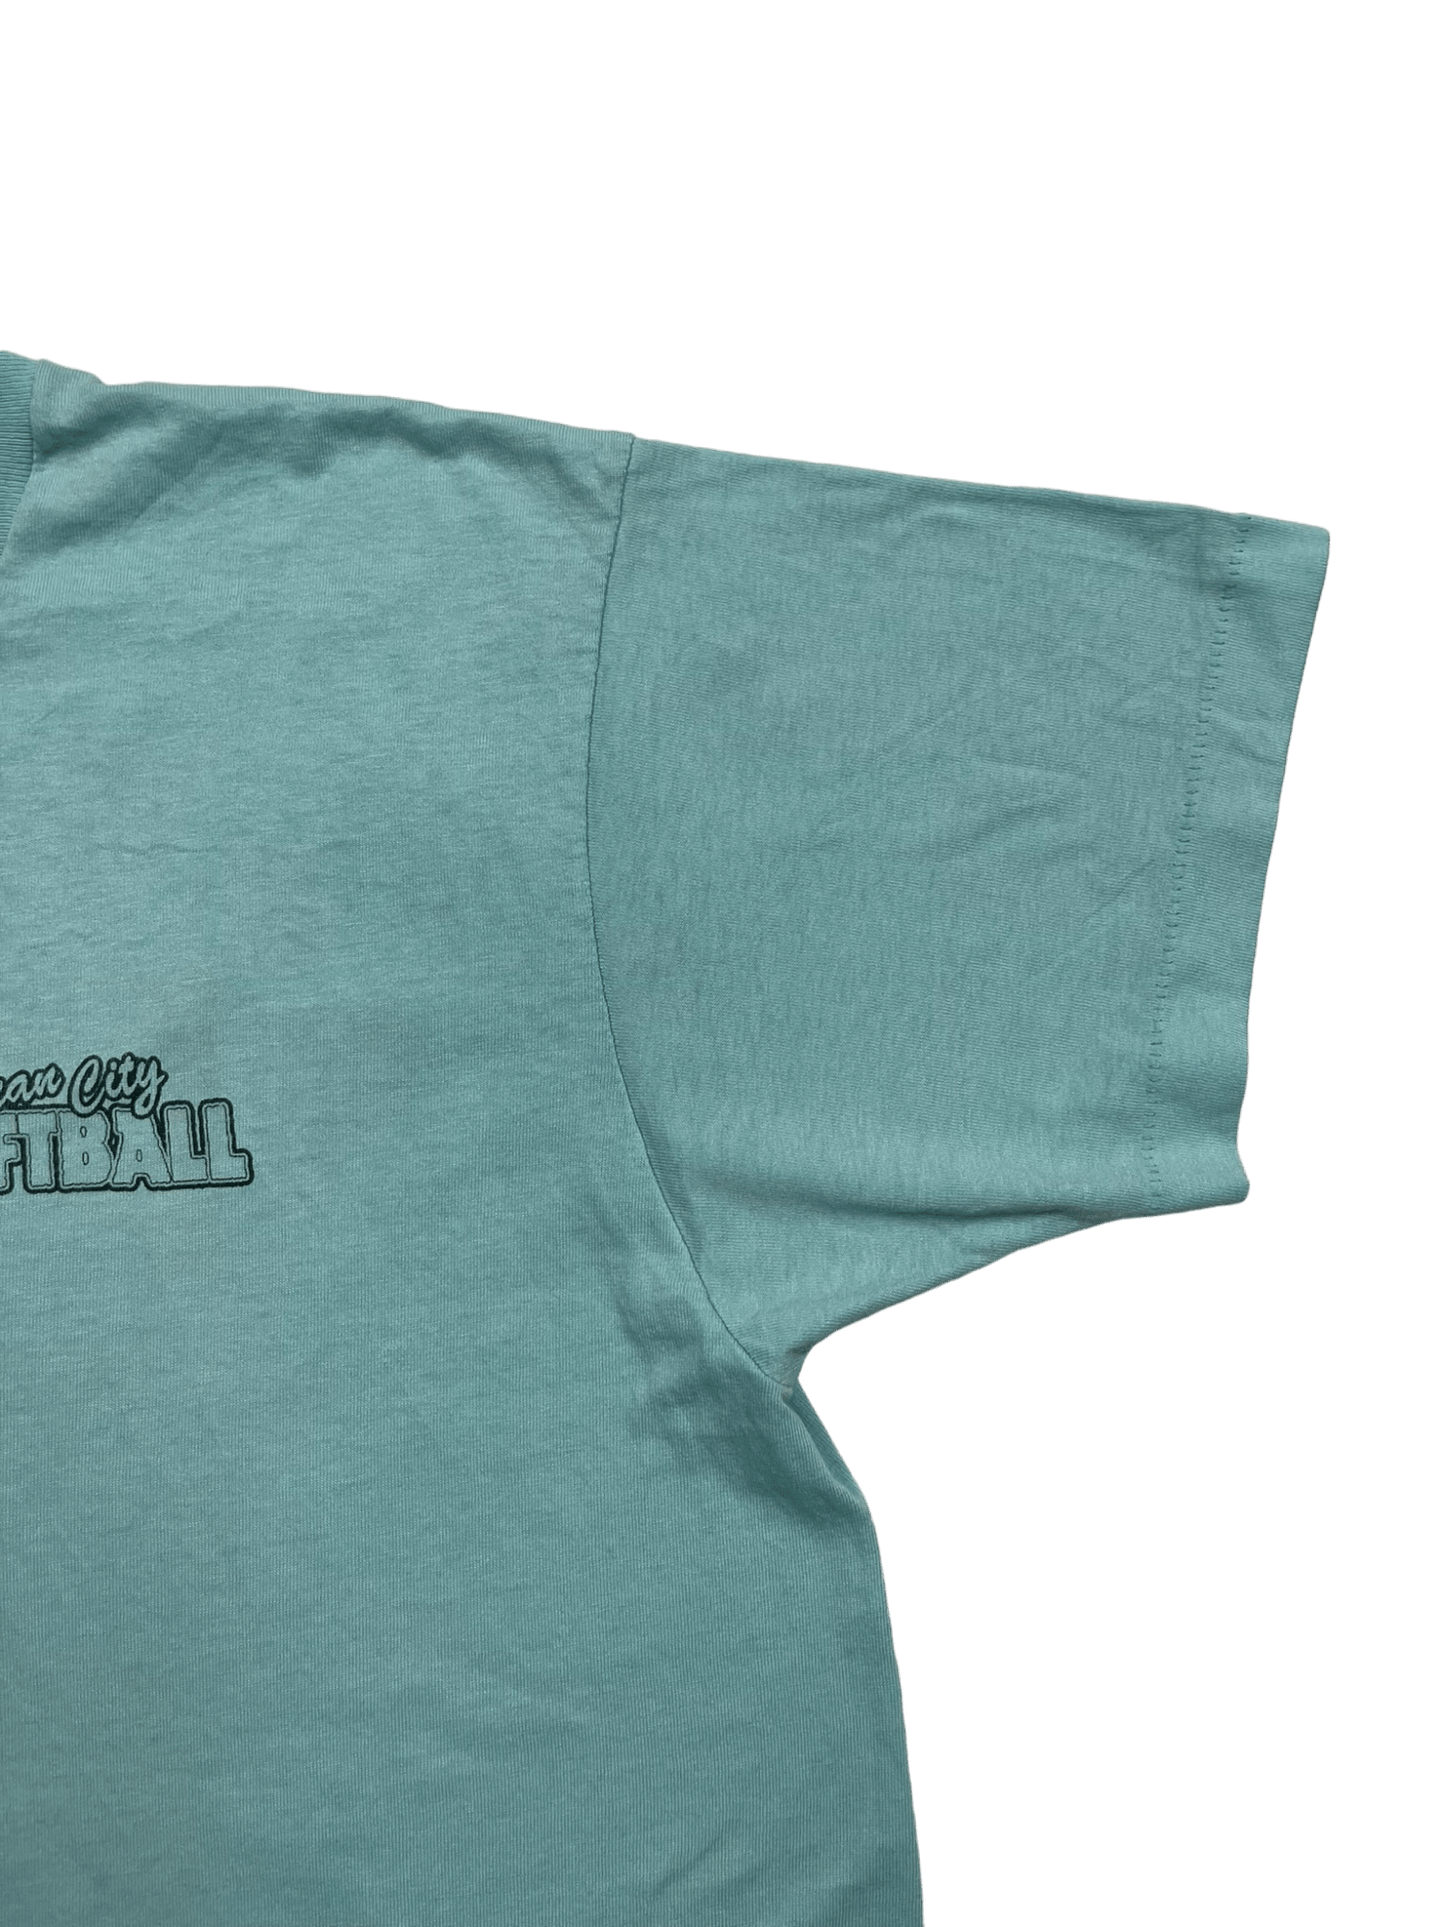 The Vintage Racks T-Shirt Ocean City Softball - L